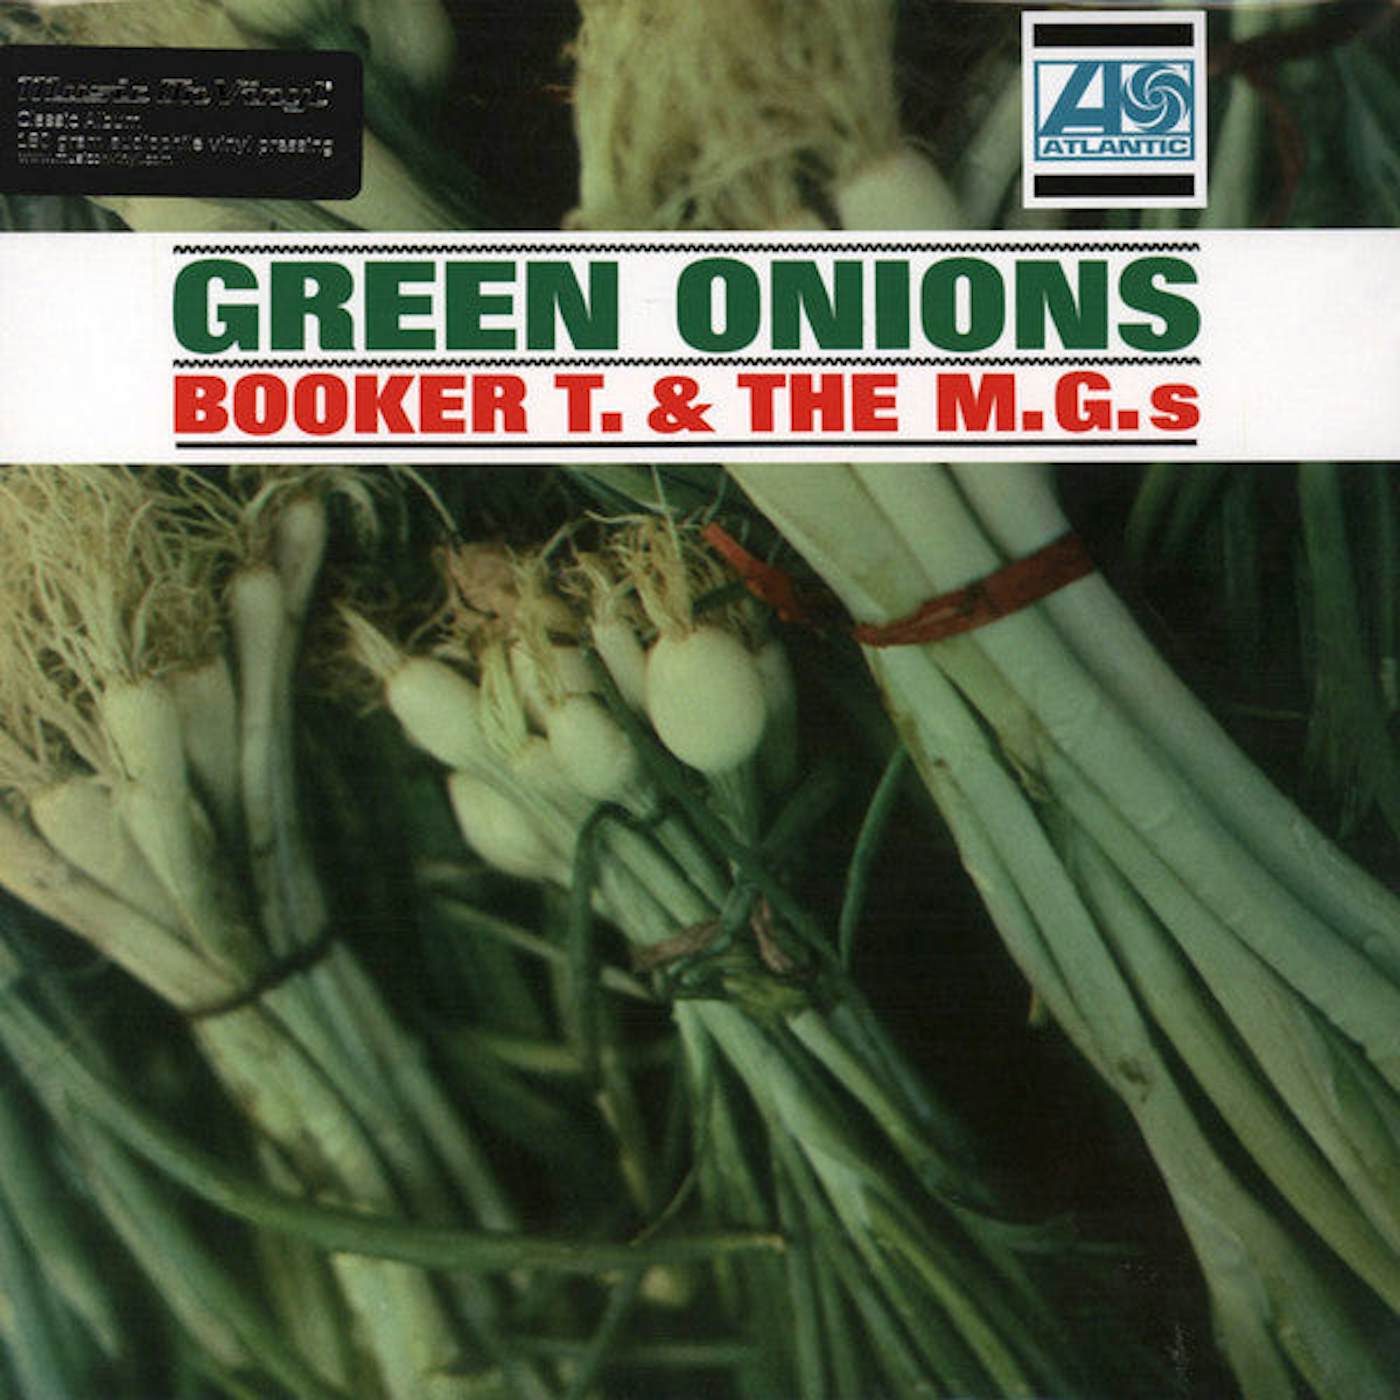 Booker T. & the M.G.'s  LP Vinyl Record - Green Onions